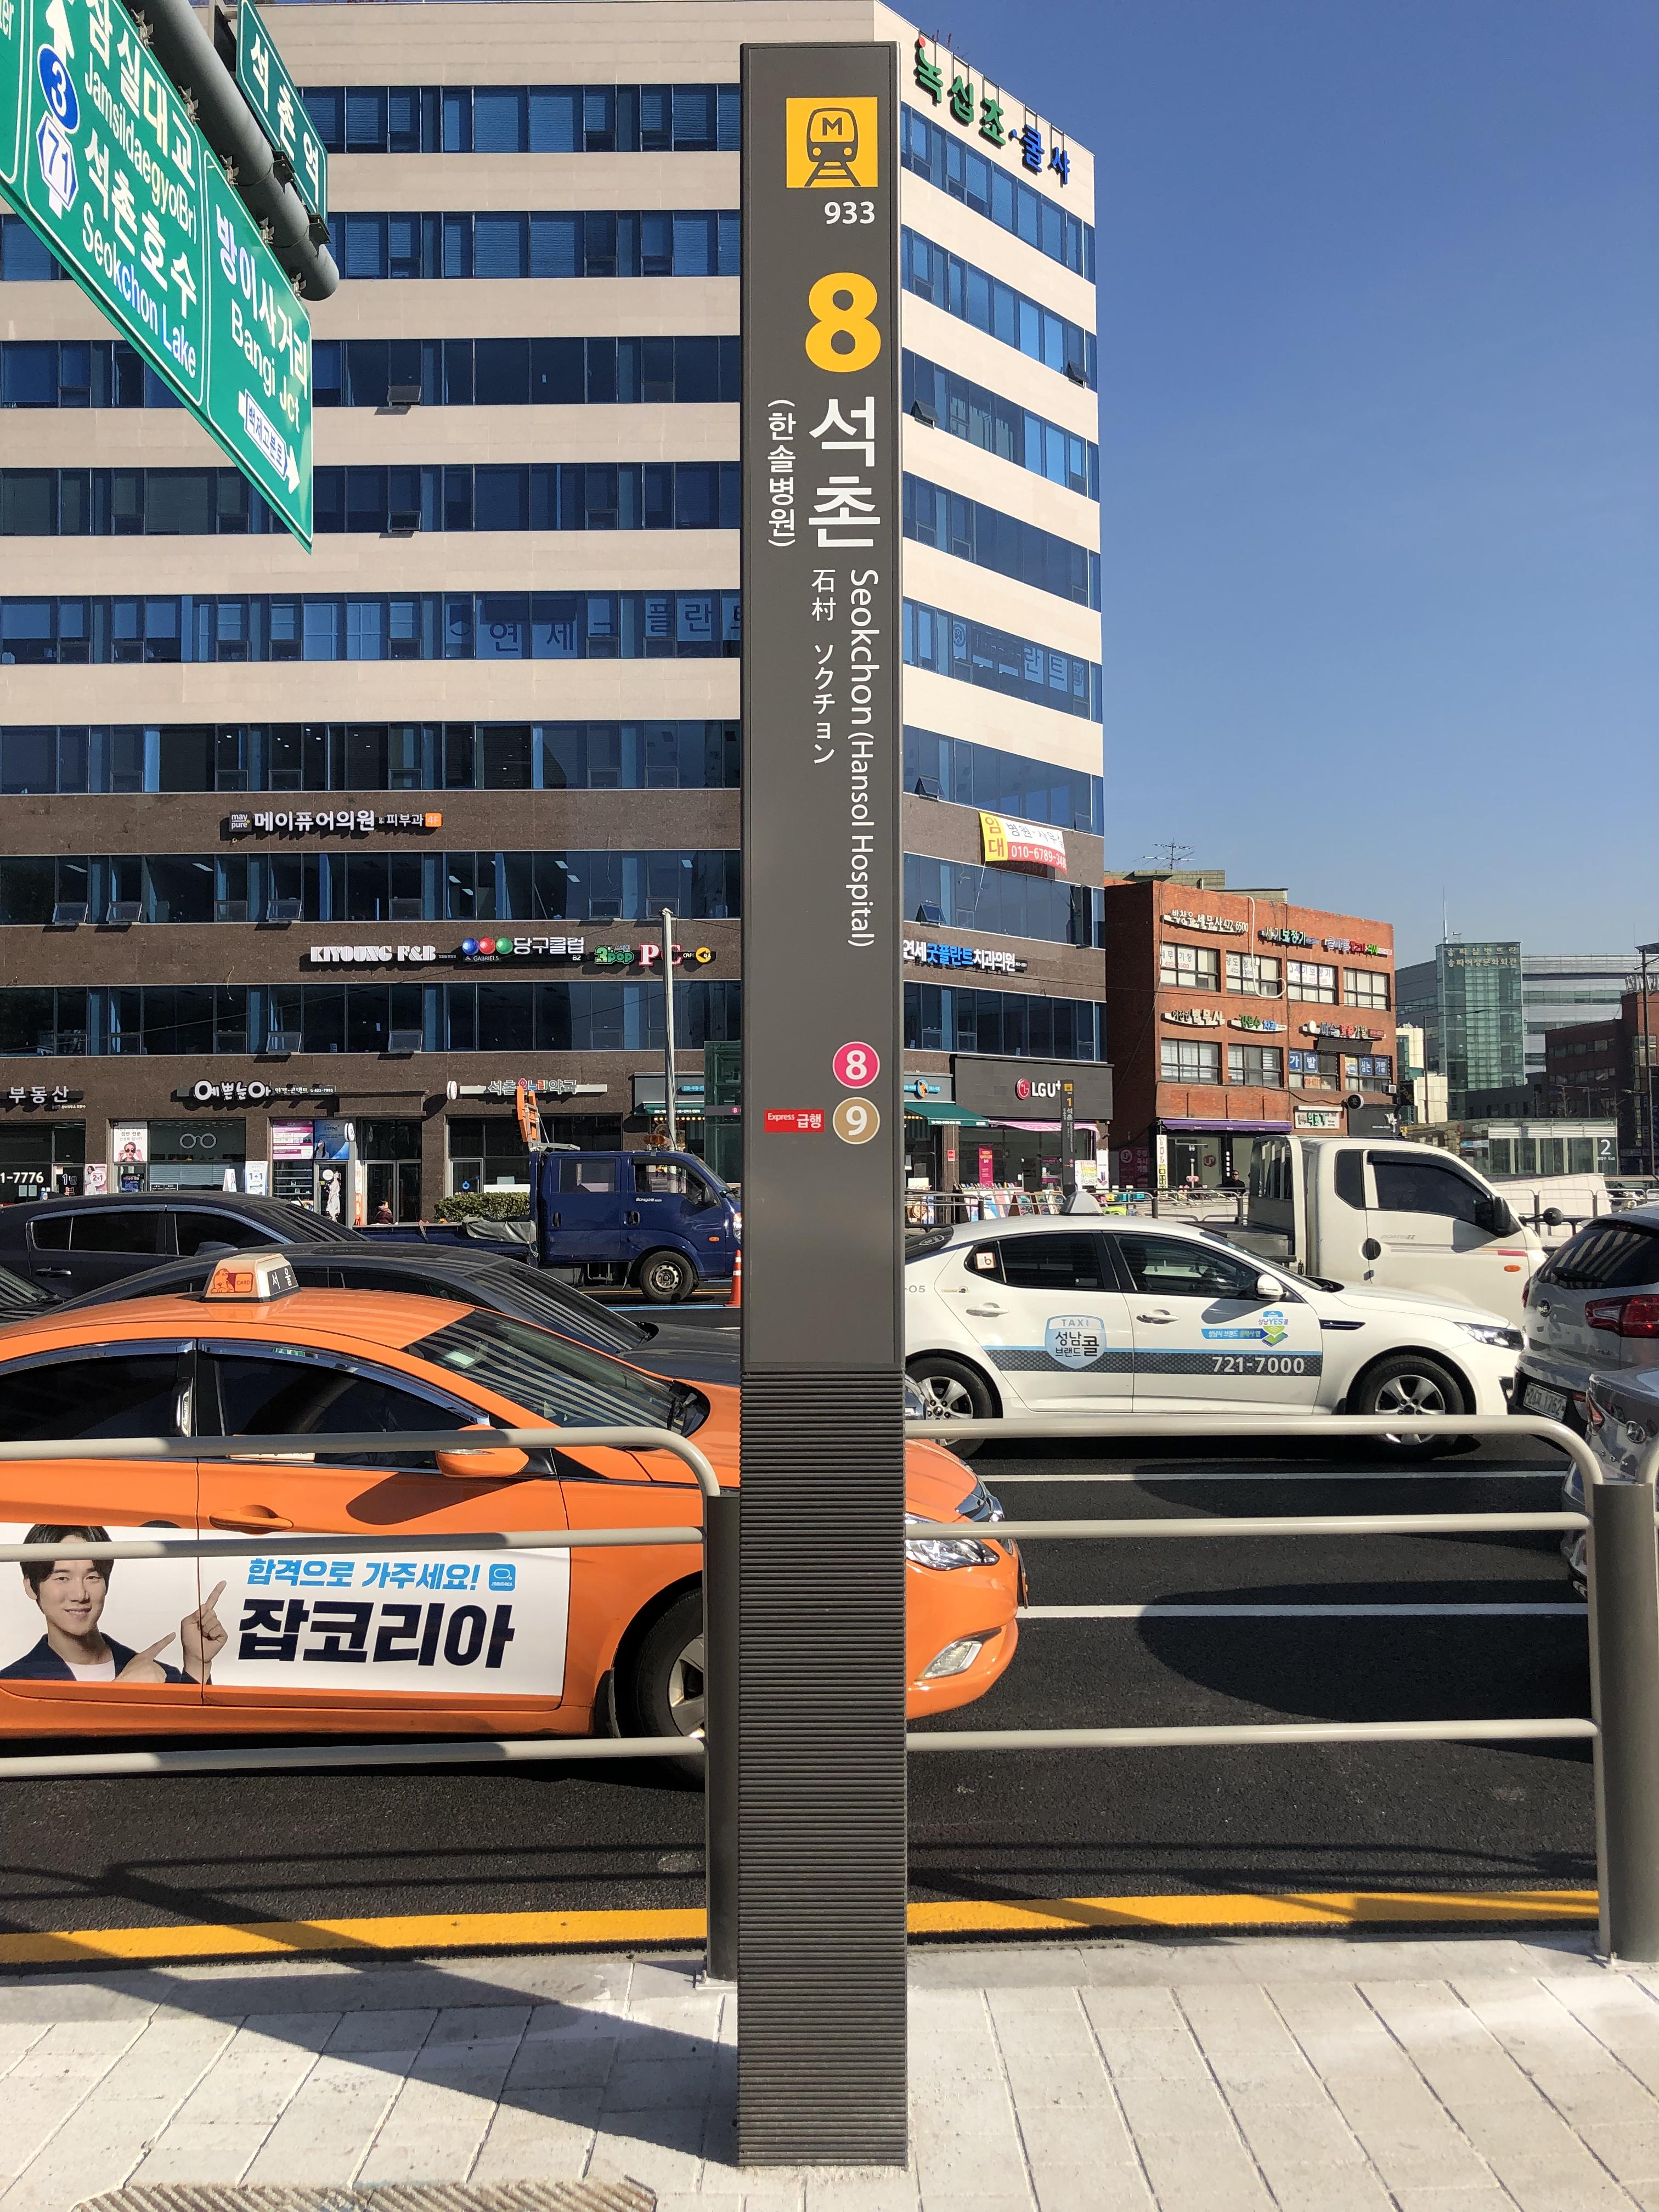 Seokchon Station Exit 8 Pole Sign 1.jpg